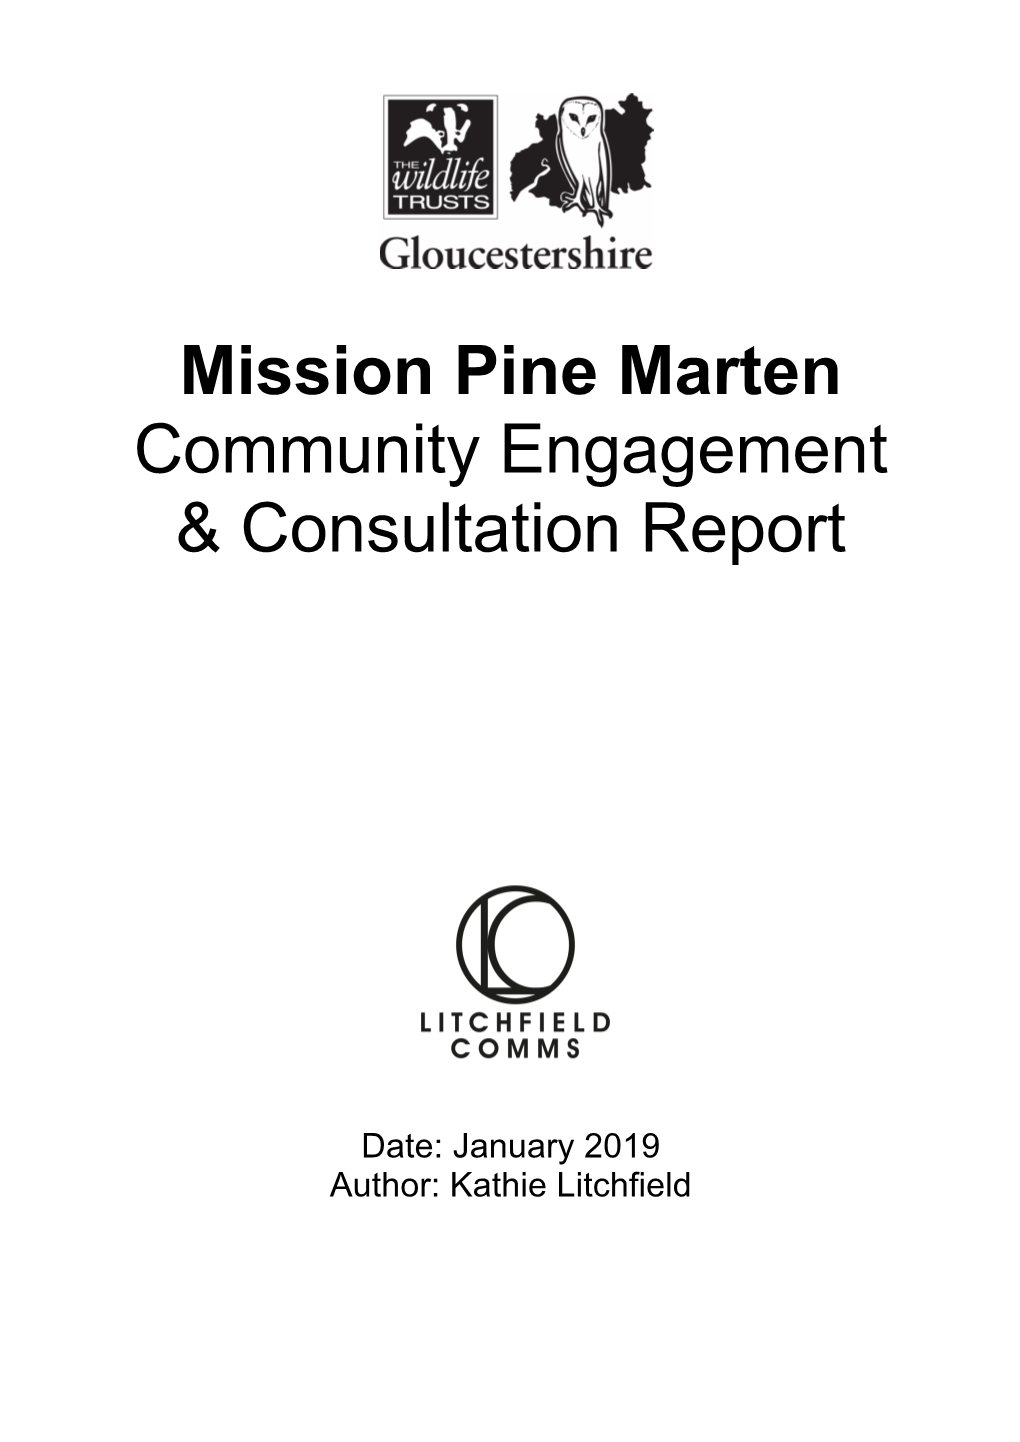 Community Engagement & Consultation Report